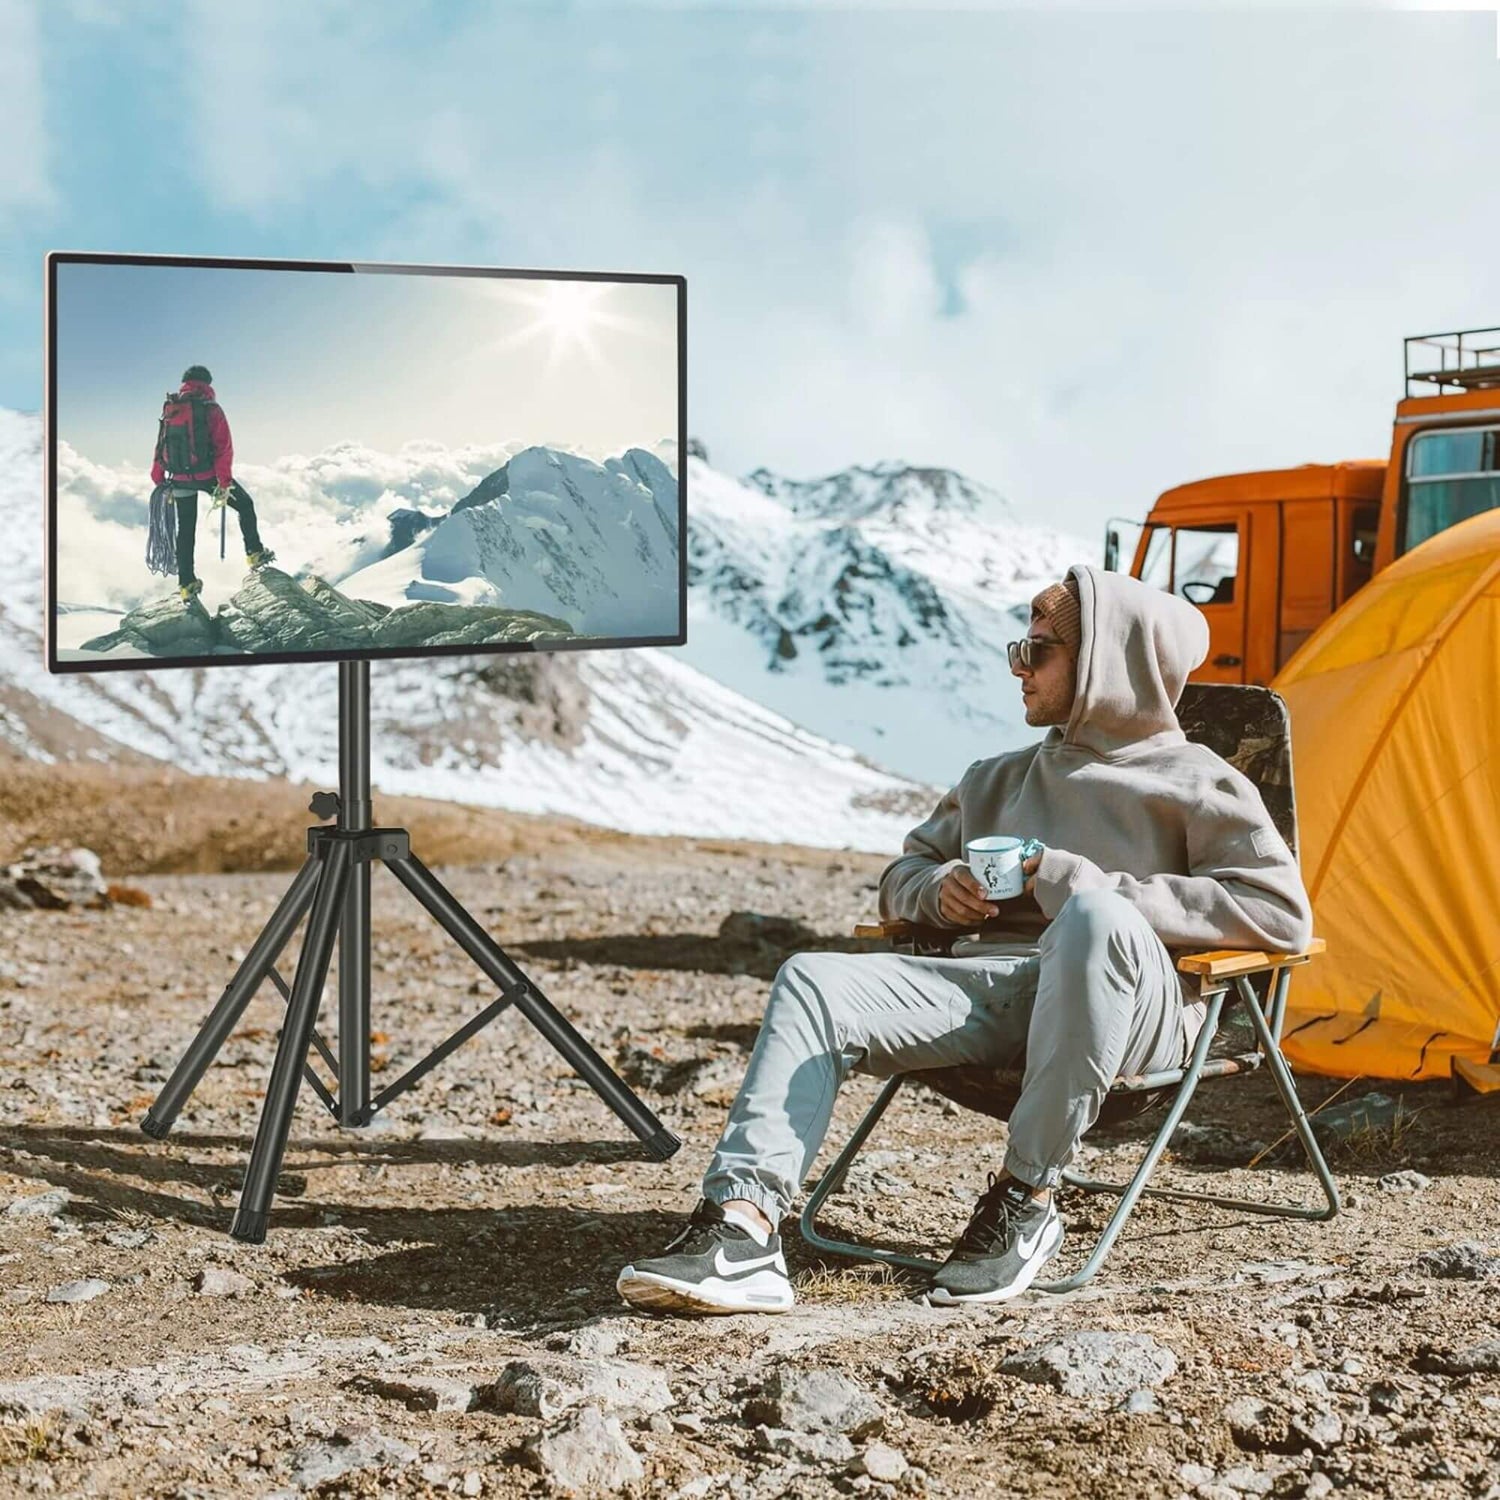 Gadget Wagon TV Stand Tripod 3-6ft Up to 55" 35kg VESA 400x400mm free shipping